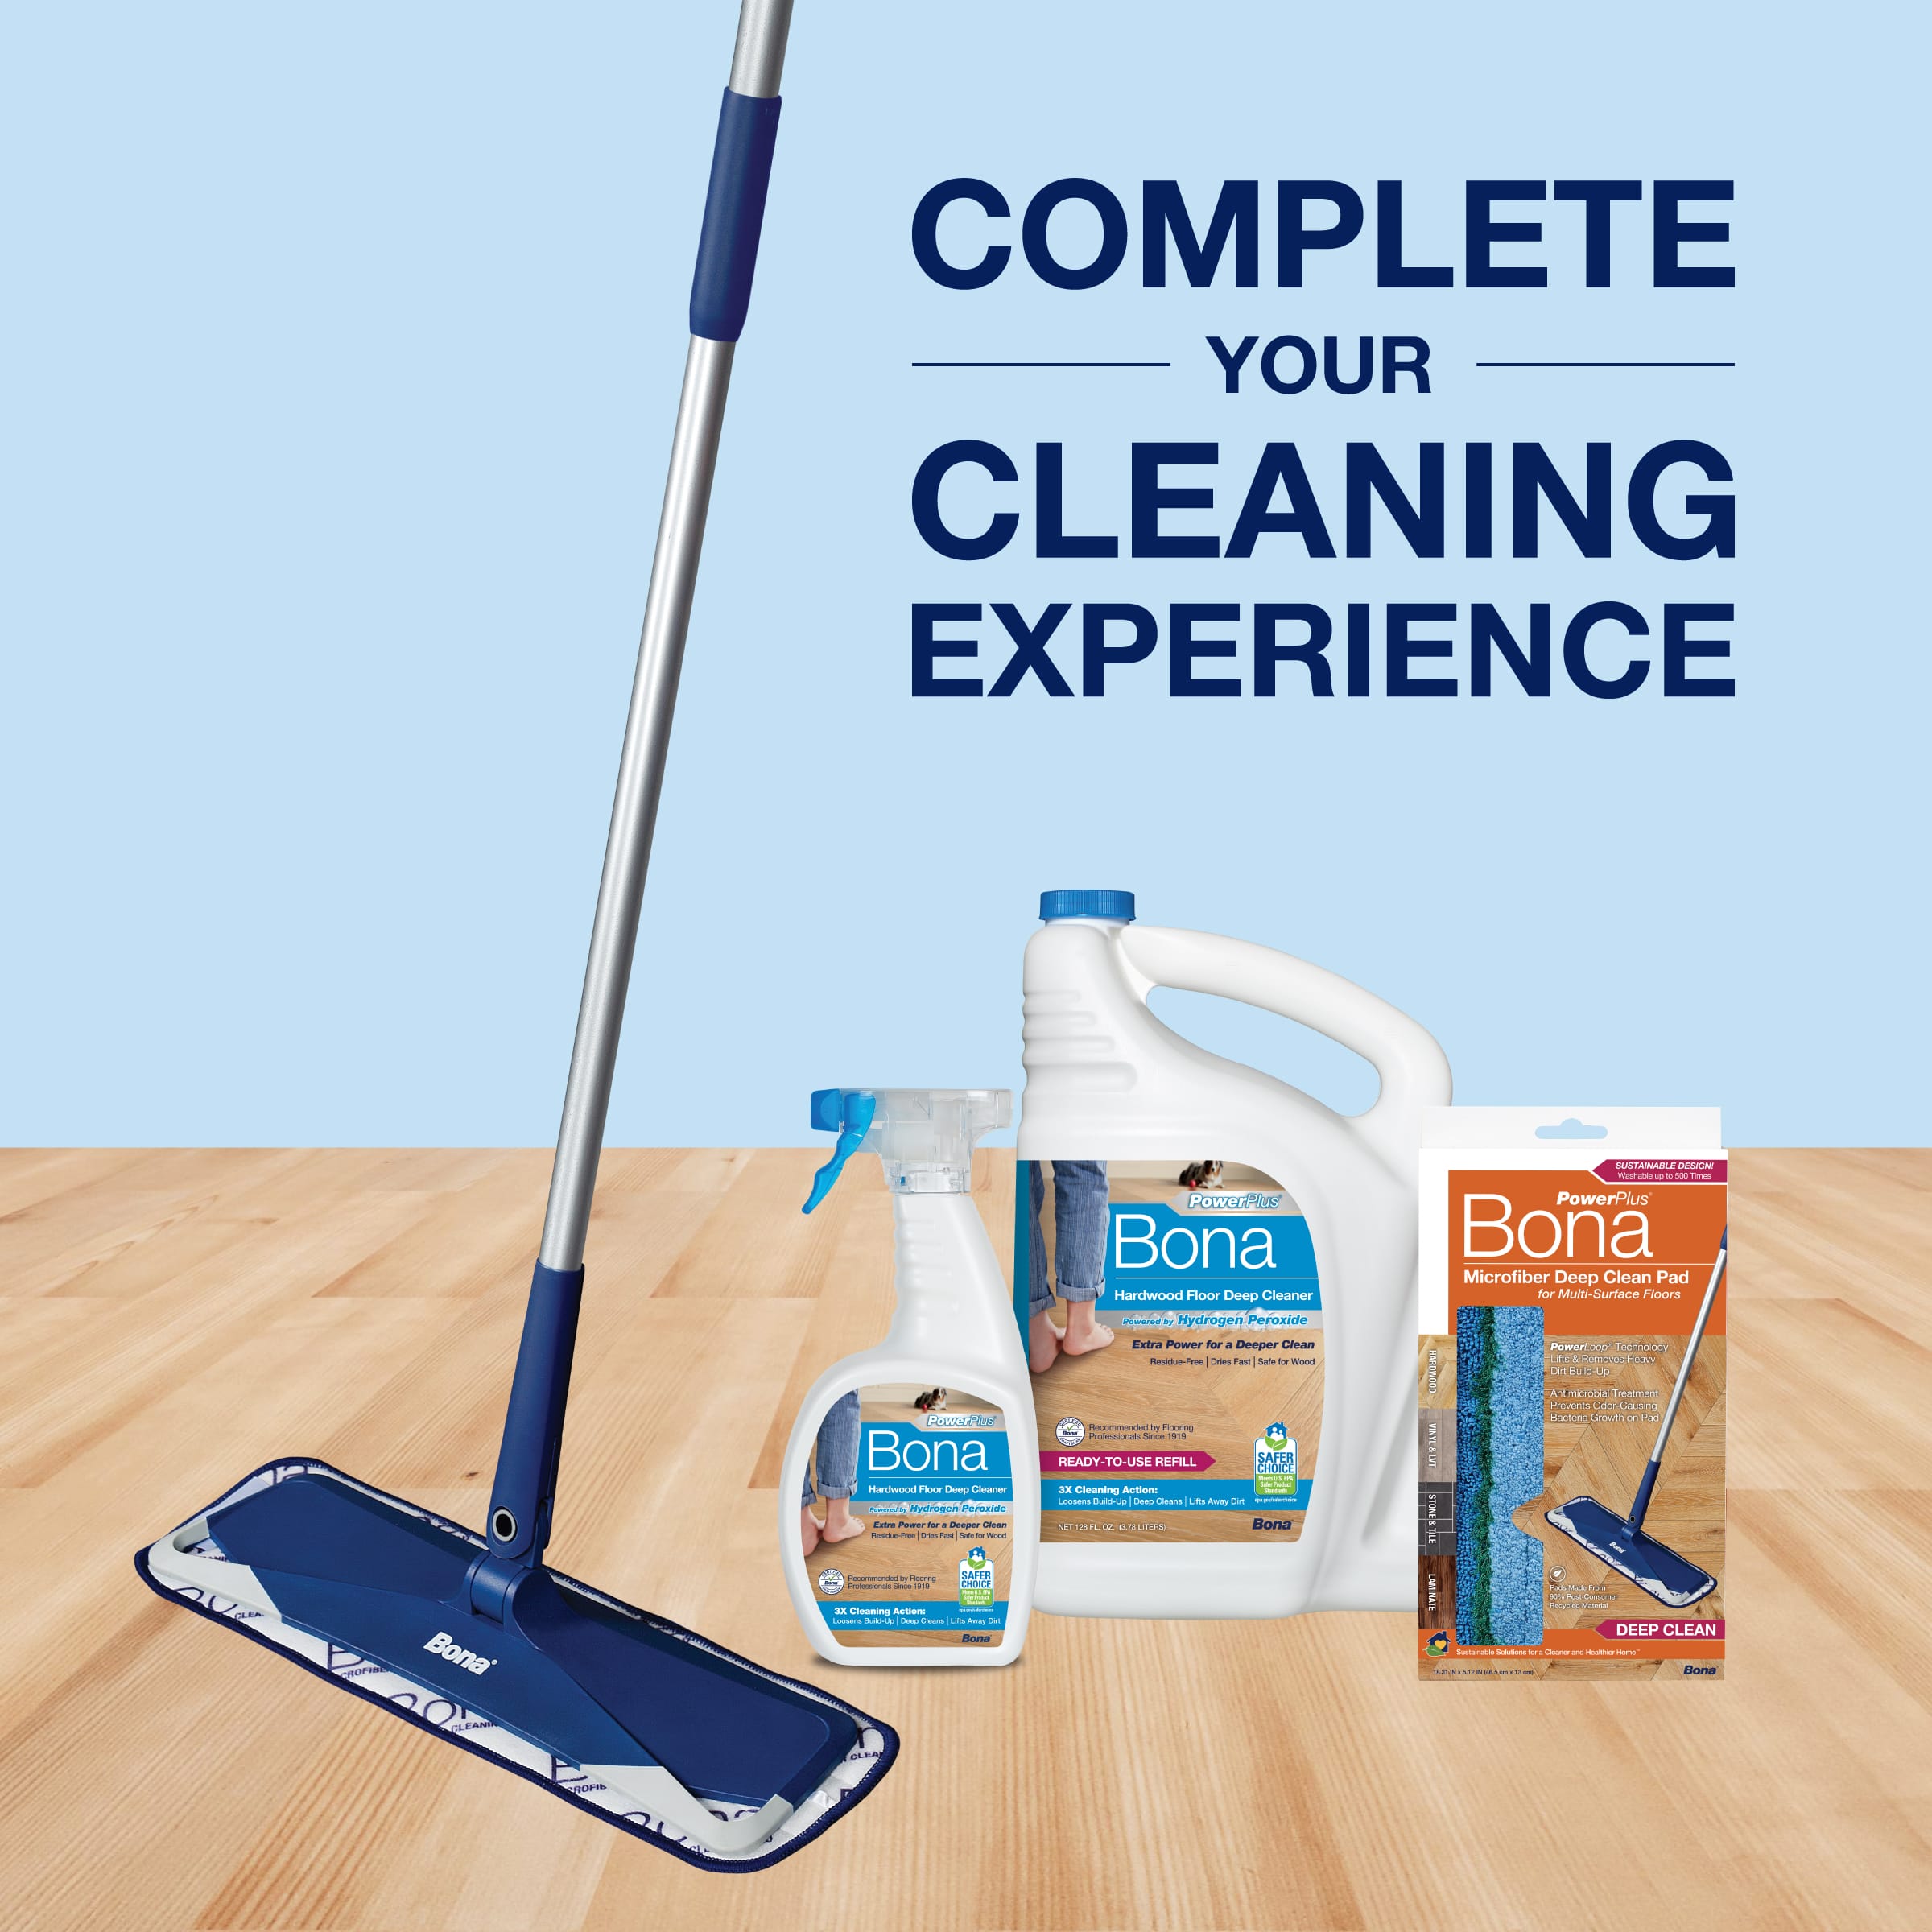 Bona Hardwood Floor Cleaner Review: Safe and effective